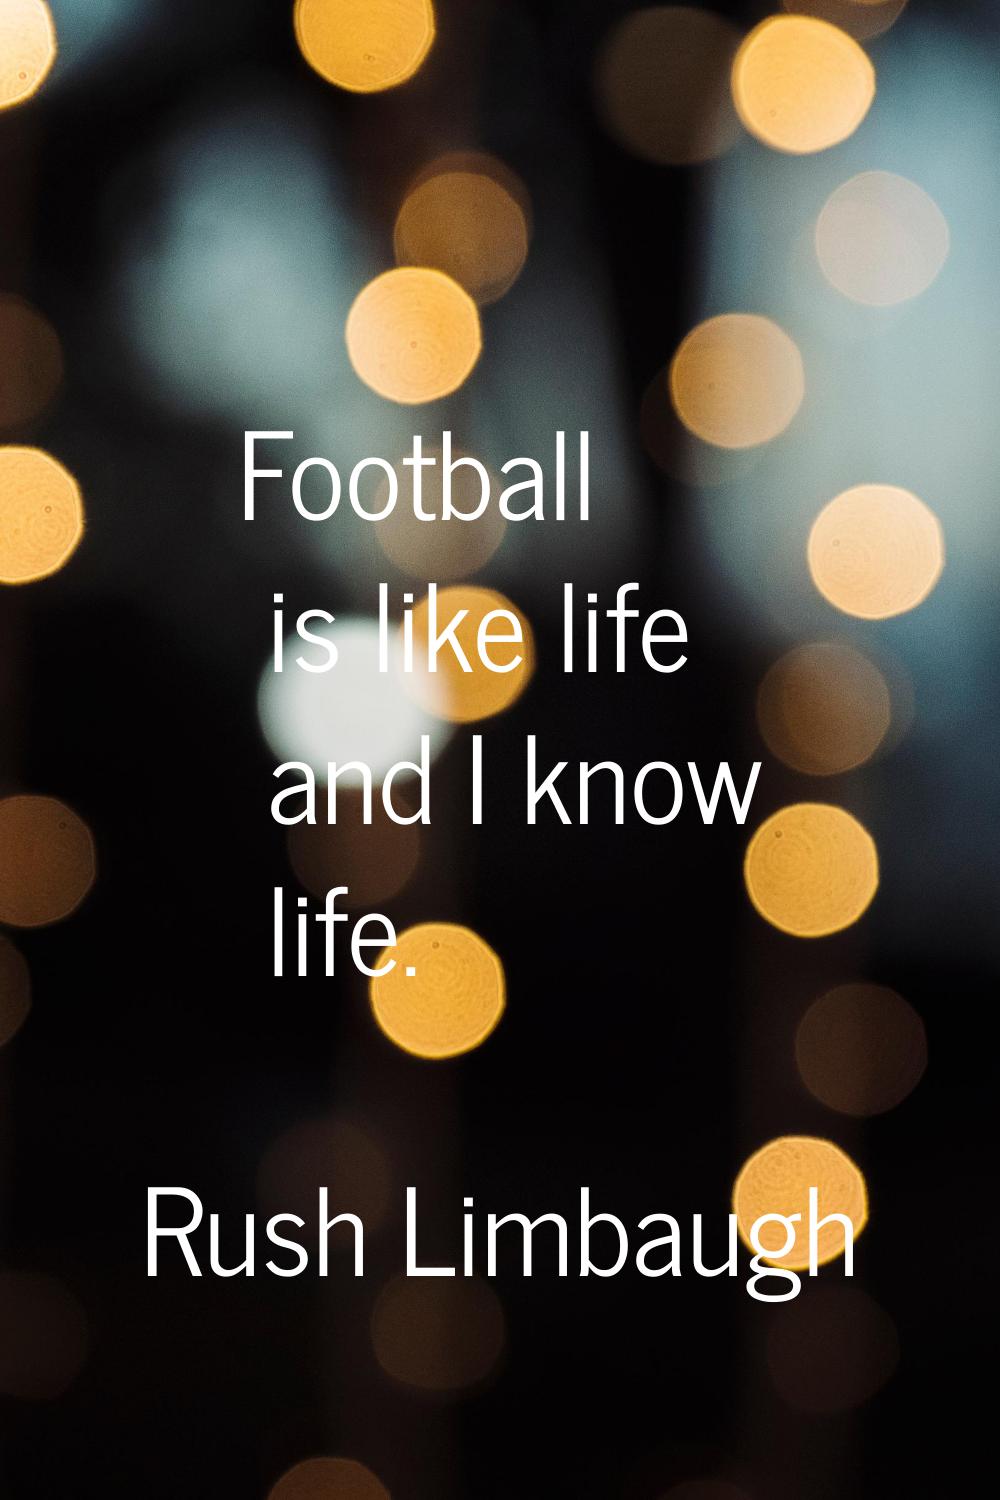 Football is like life and I know life.